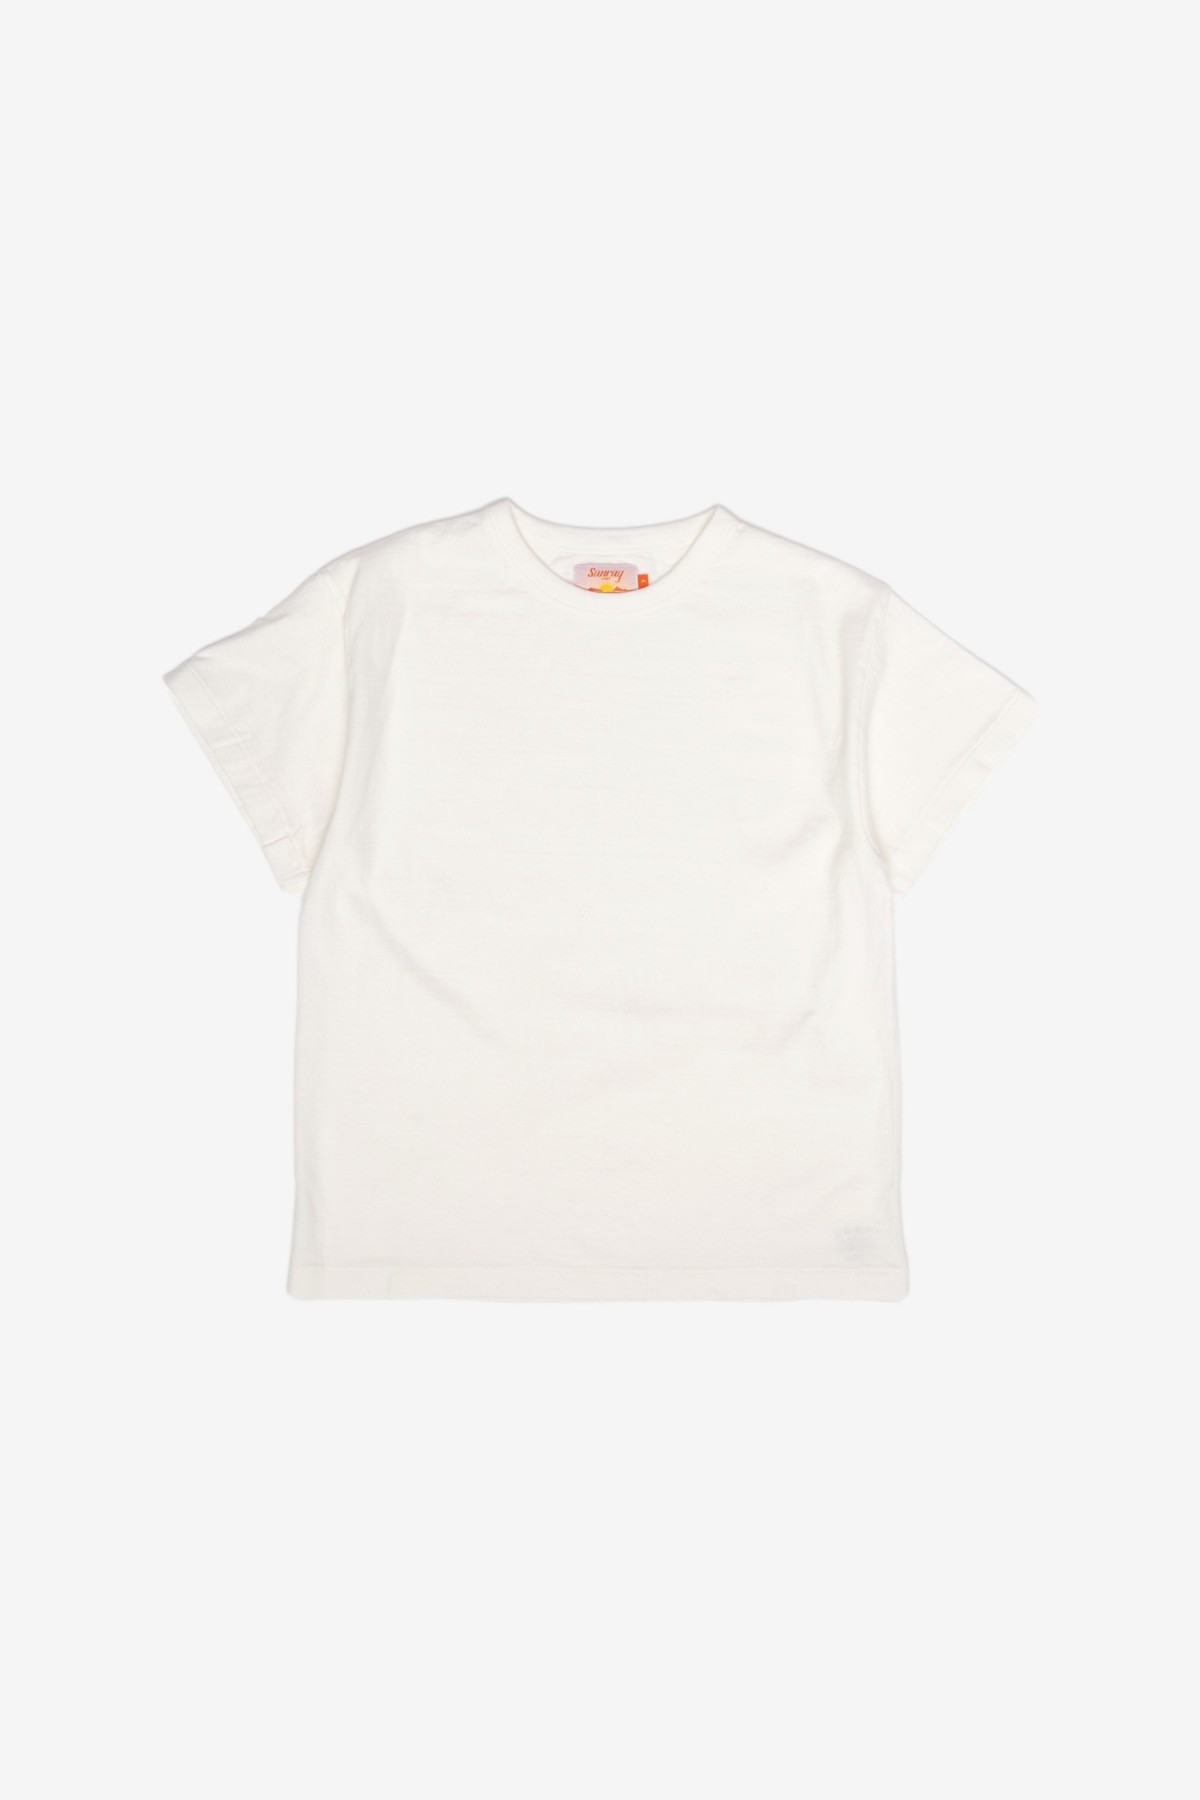 Sunray Sportswear Na'Maka'Oh Short Sleeve T-Shirt in Off White